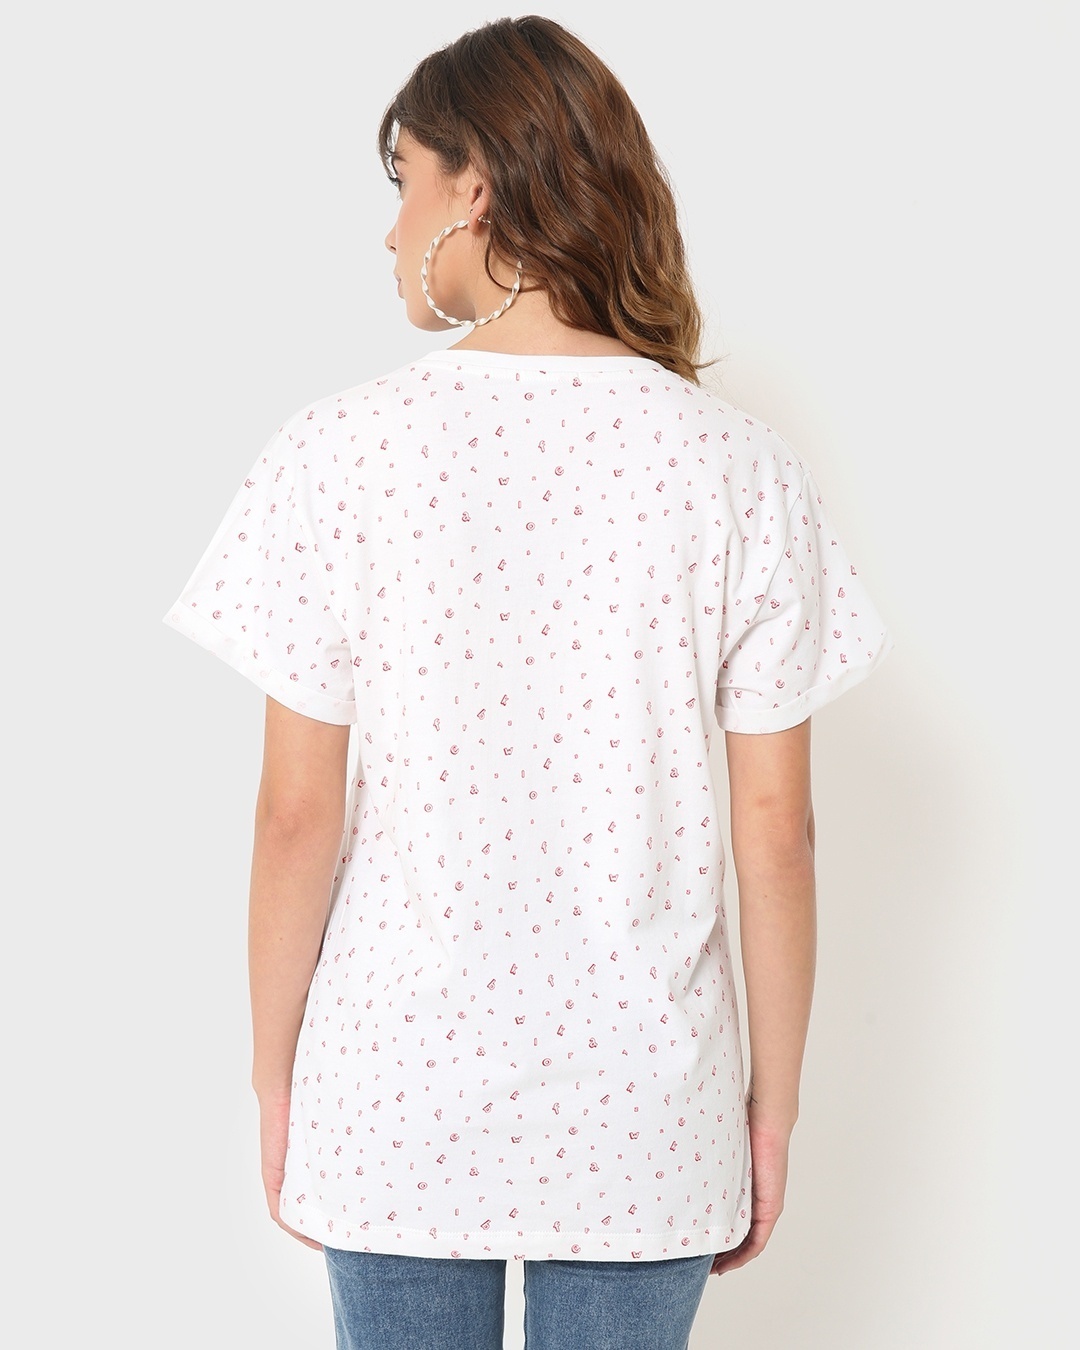 Shop White All Over Printed Boyfriend T-Shirt-Design